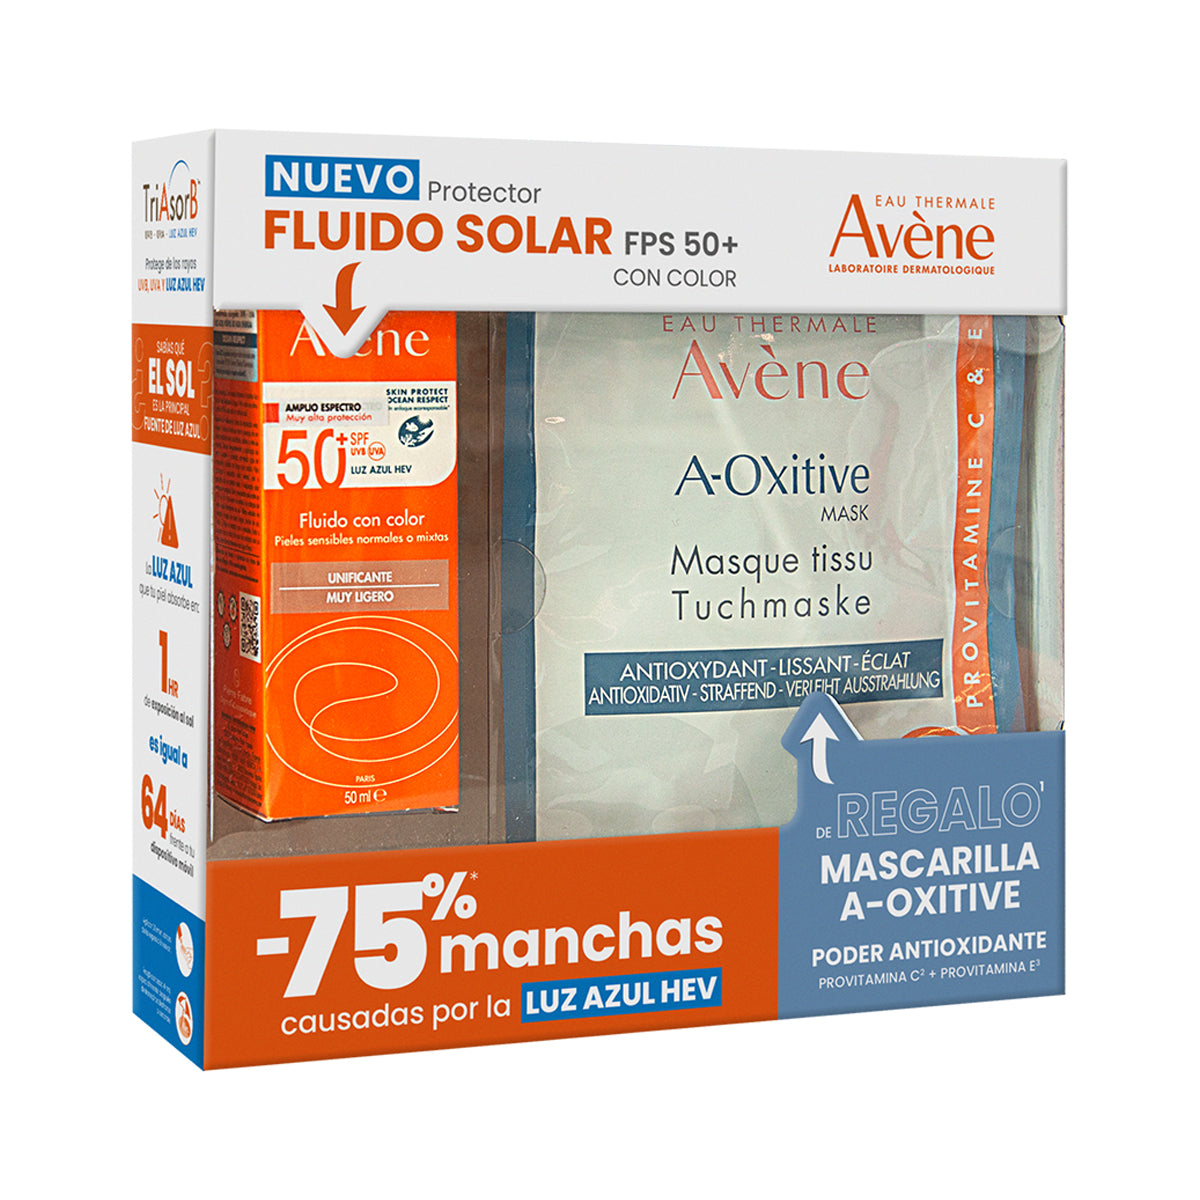 Avene Kit fluido solar FPS 50+ con color 50 ml + Mascarilla a-oxitive 18 ml.